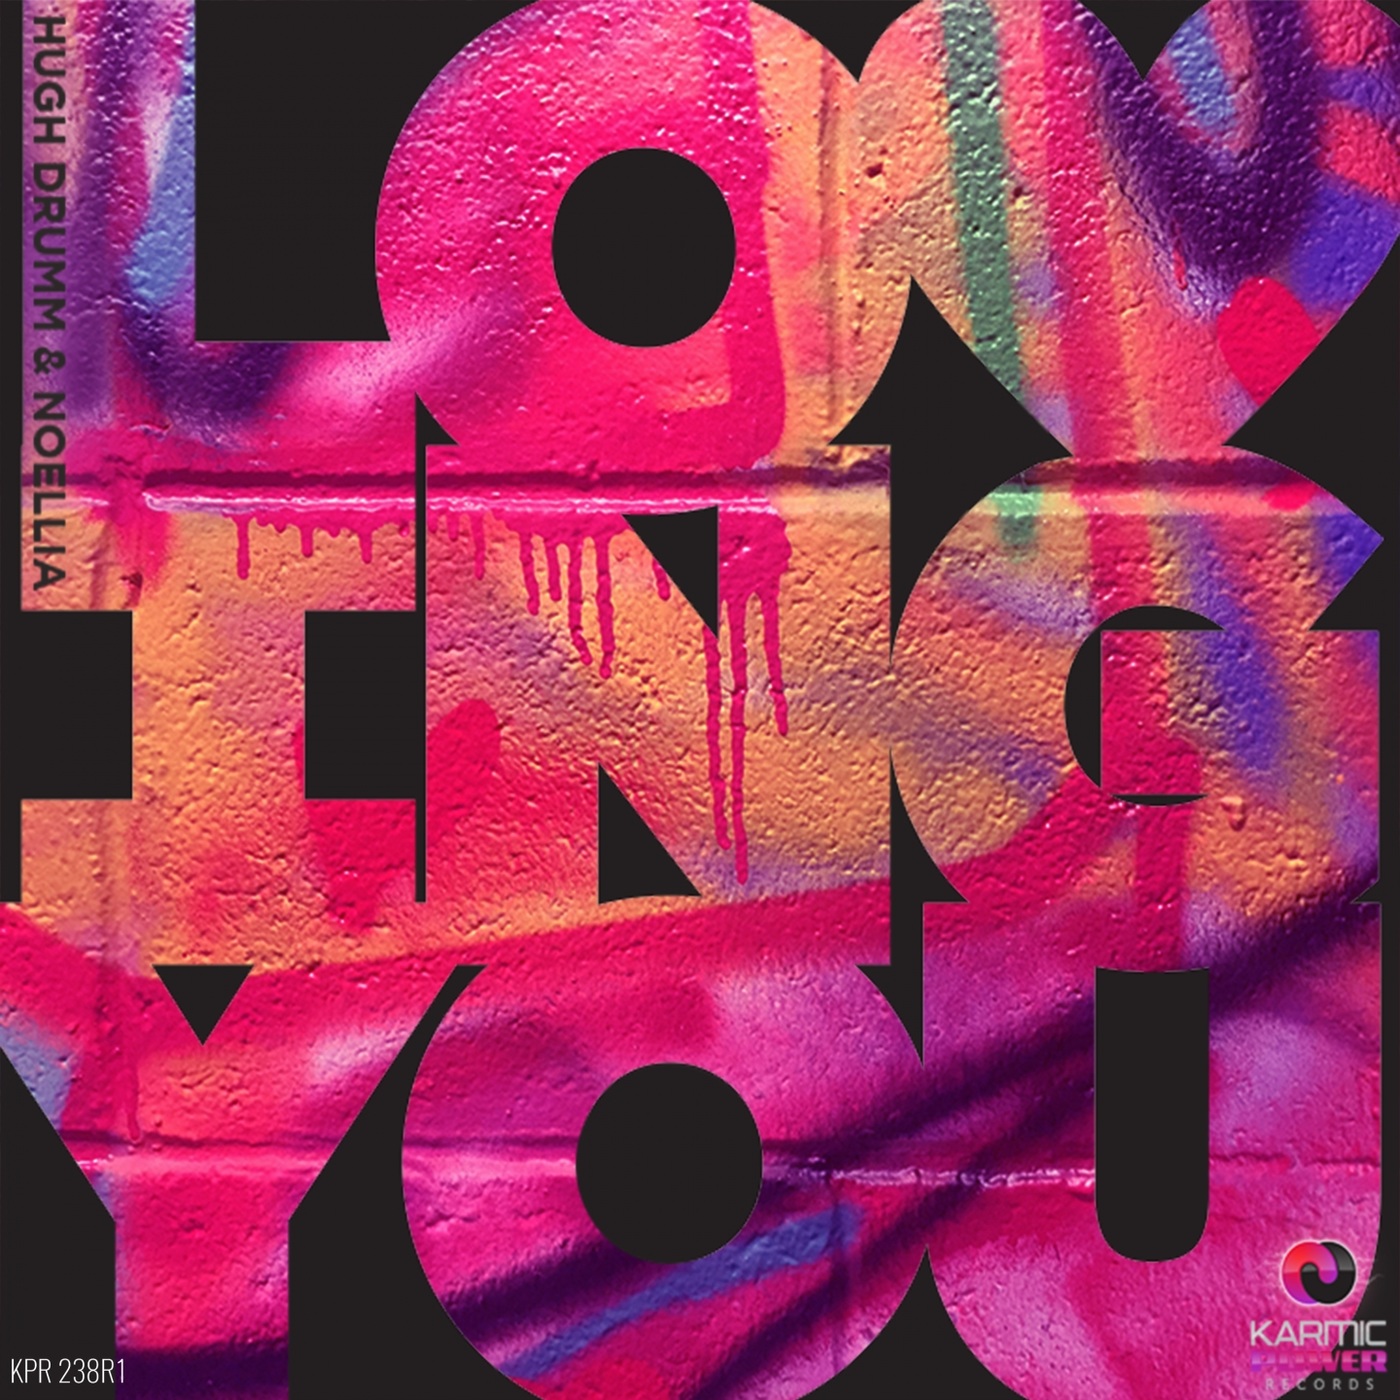 Hugh Drumm - Loving You (Remixes, Pt. 1) / Karmic Power Records